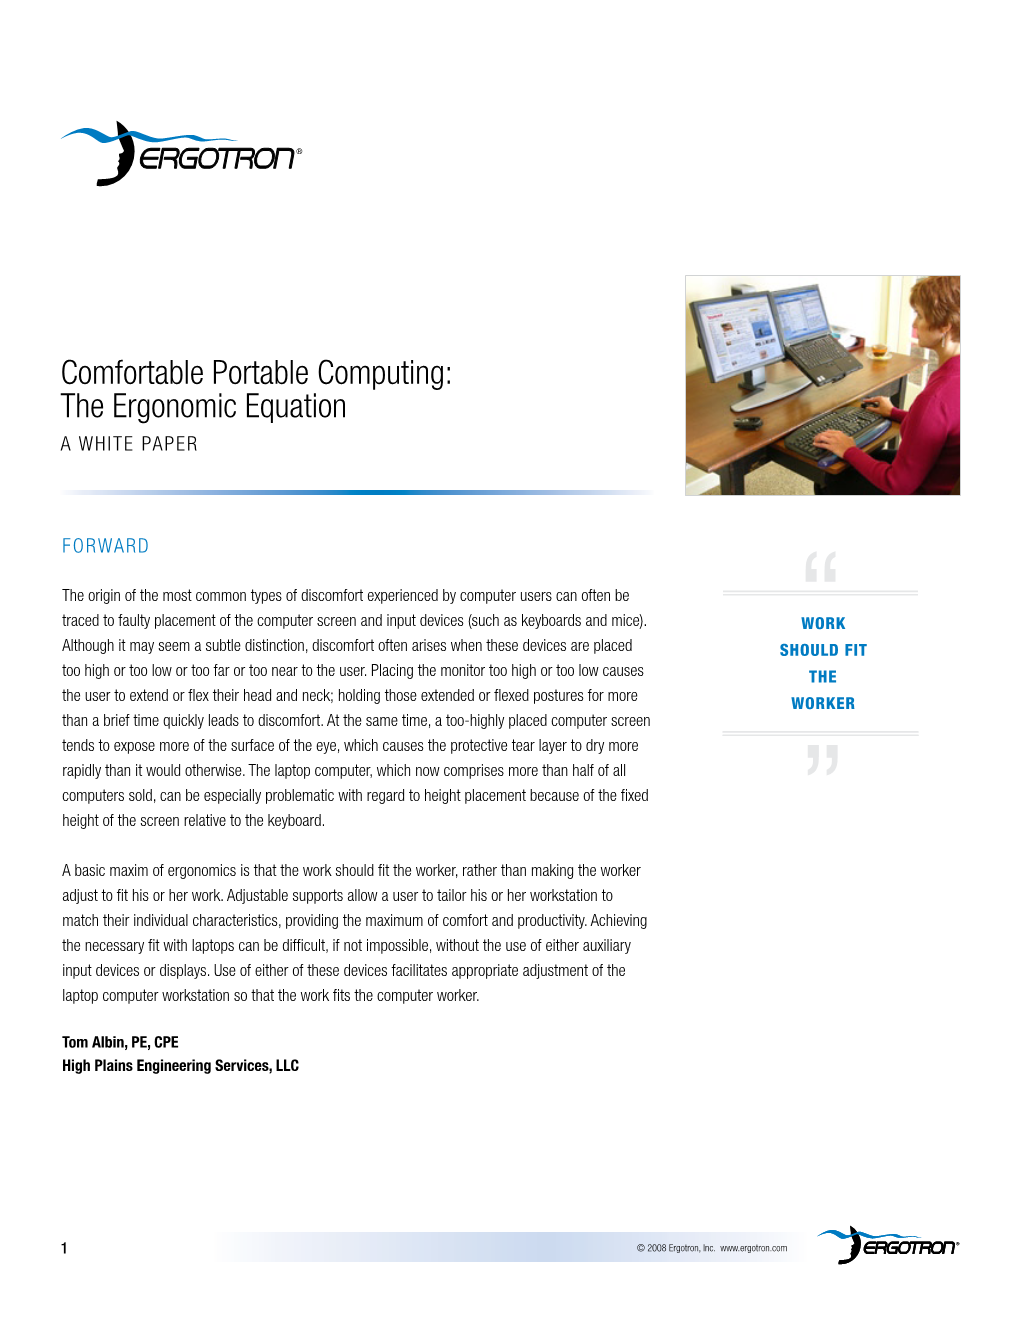 Comfortable Portable Computing: the Ergonomic Equation a White Paper